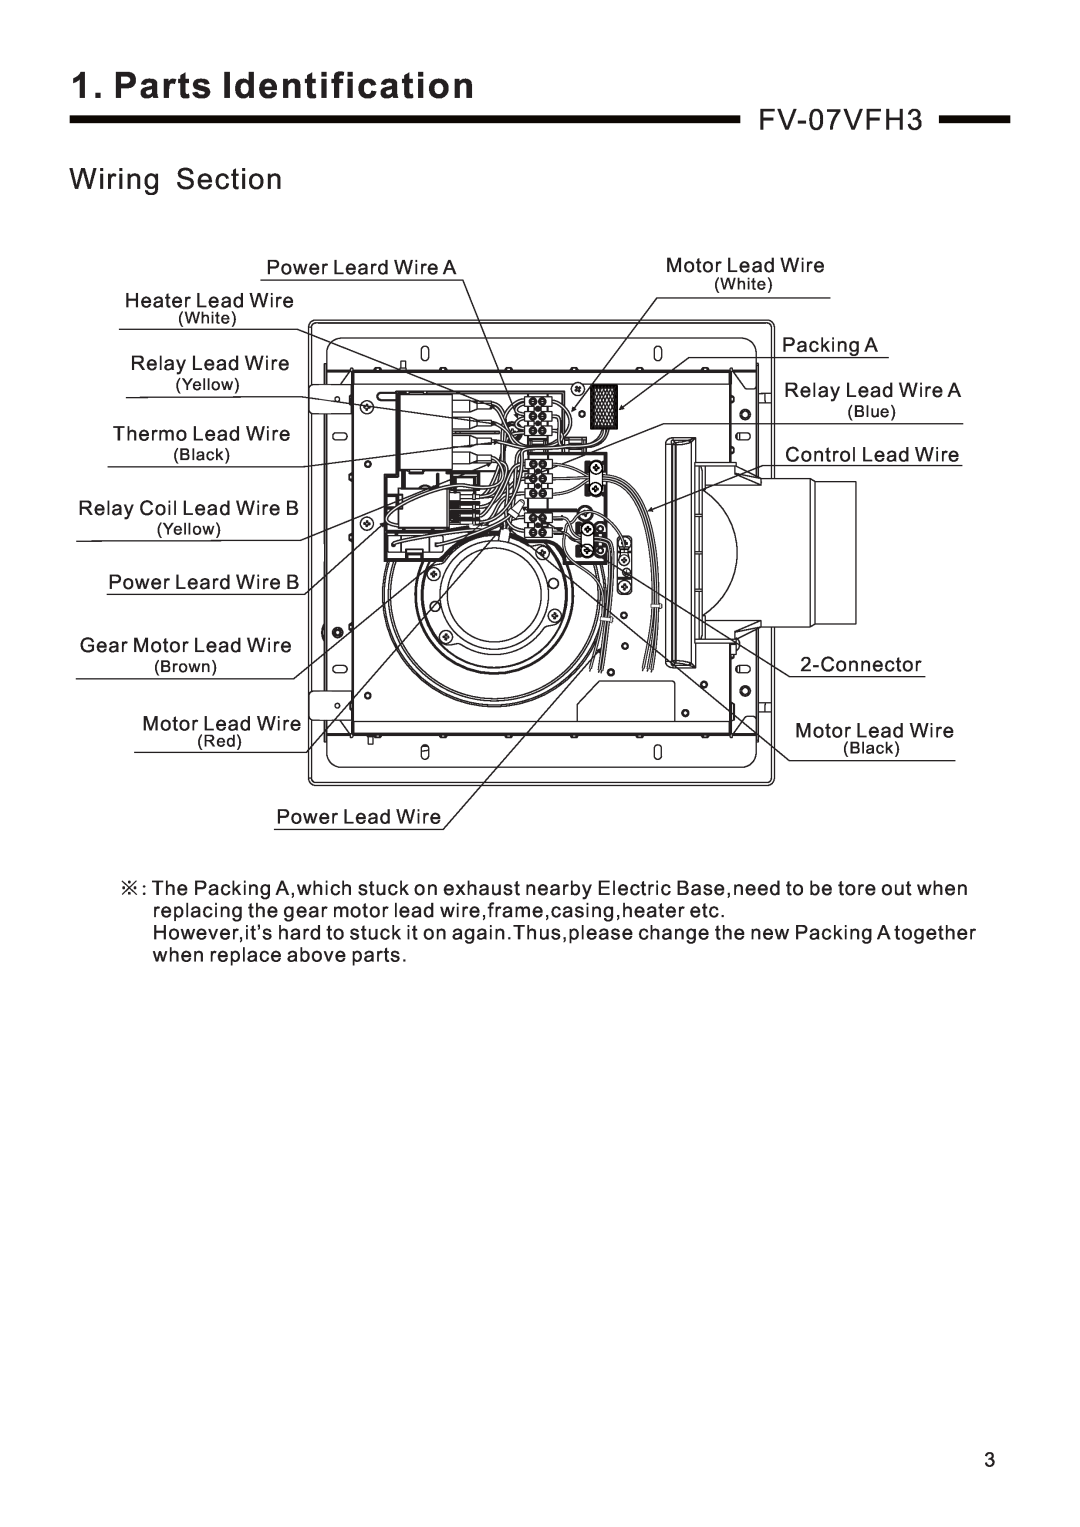 Panasonic service manual FV-07VFH3 Wiring Section, Parts Identification 